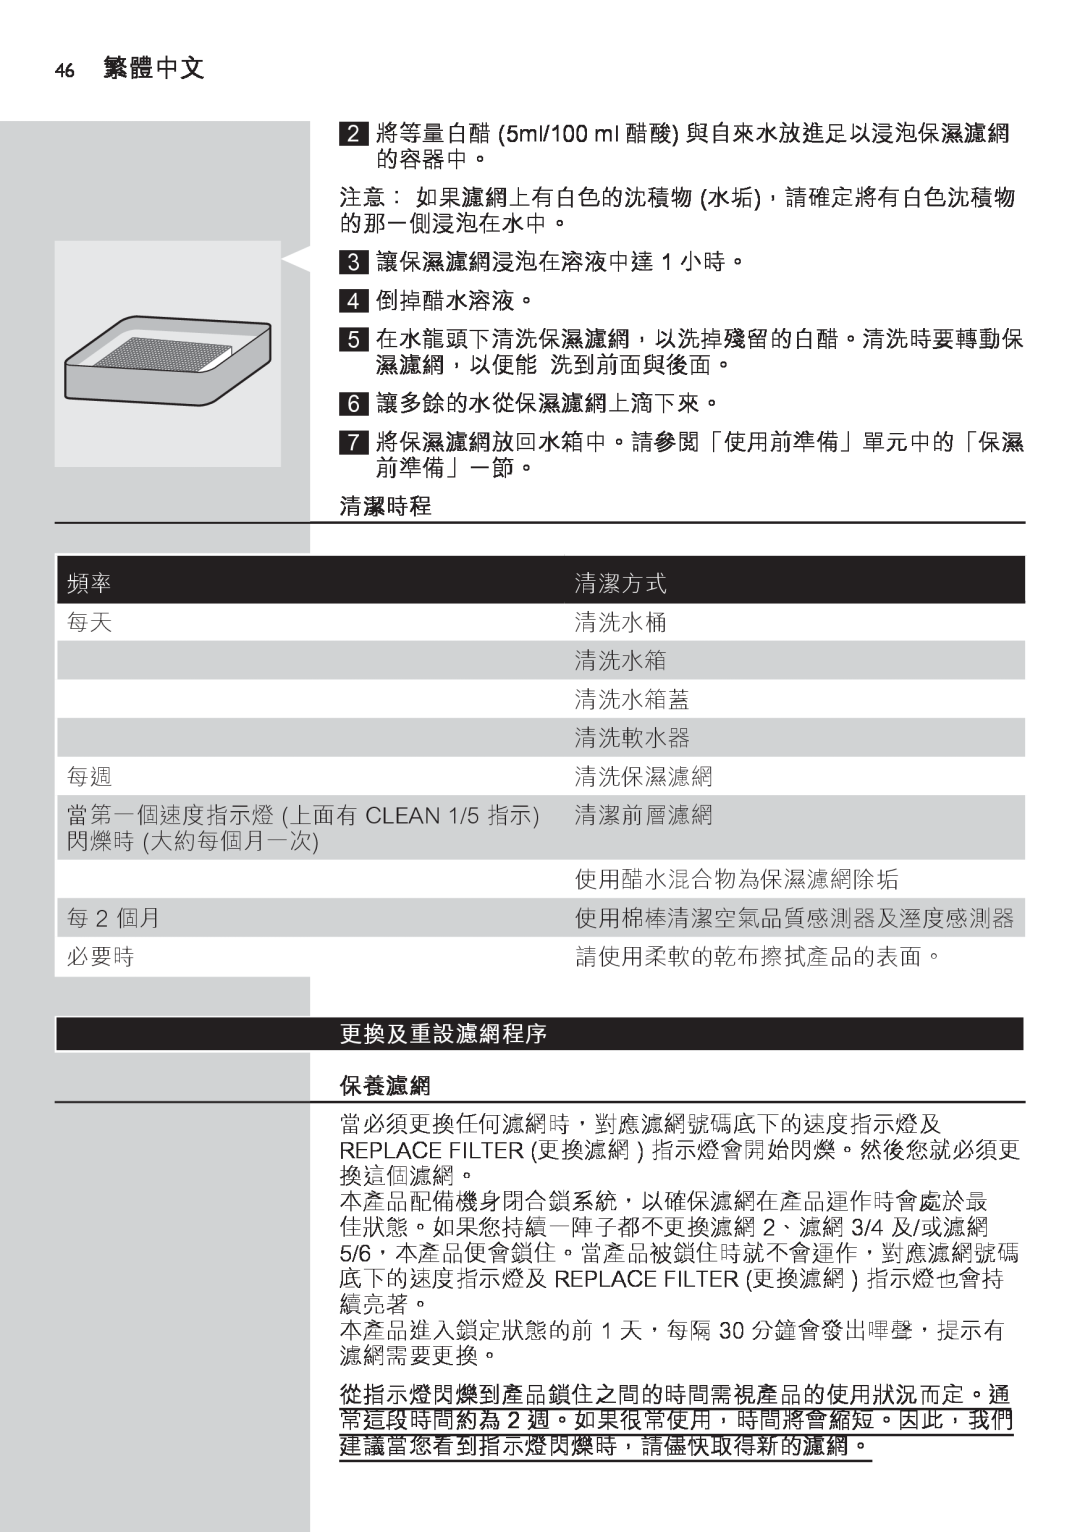 Philips AC4083 manual 46繁體中文, 清潔時程, 清潔方式, 更換及重設濾網程序, 保養濾網 